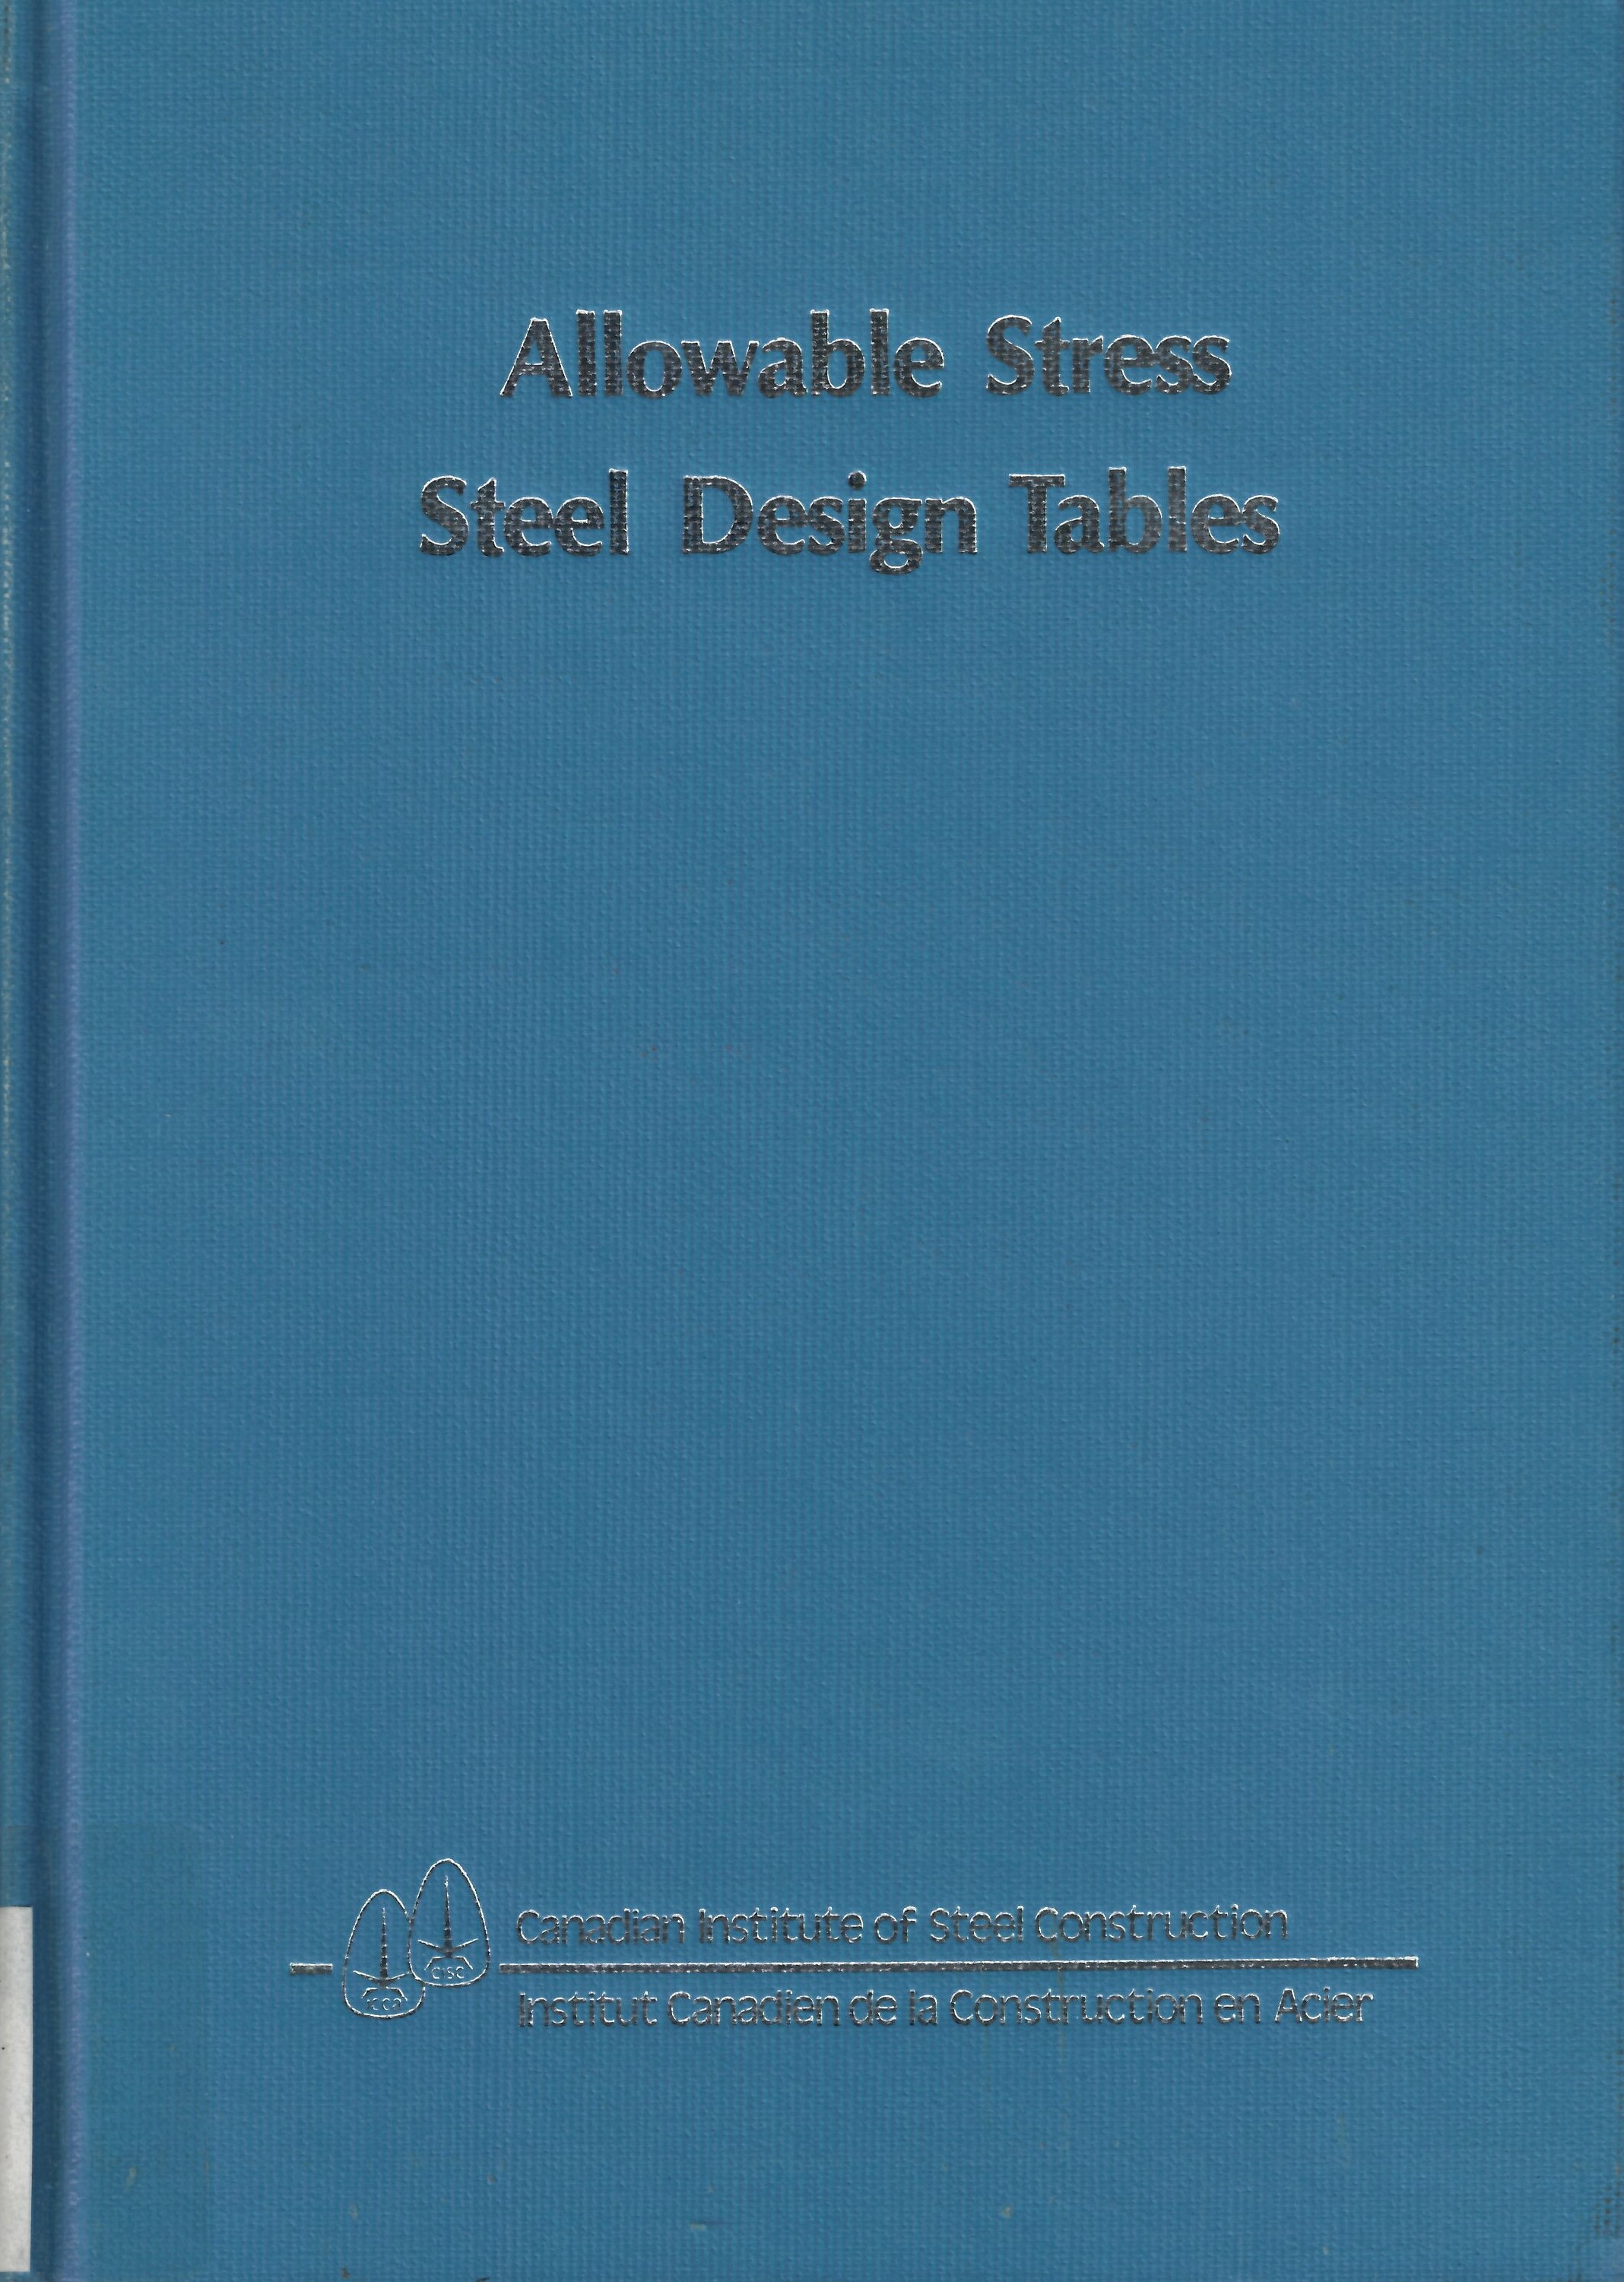 Allowable stress steel design tables